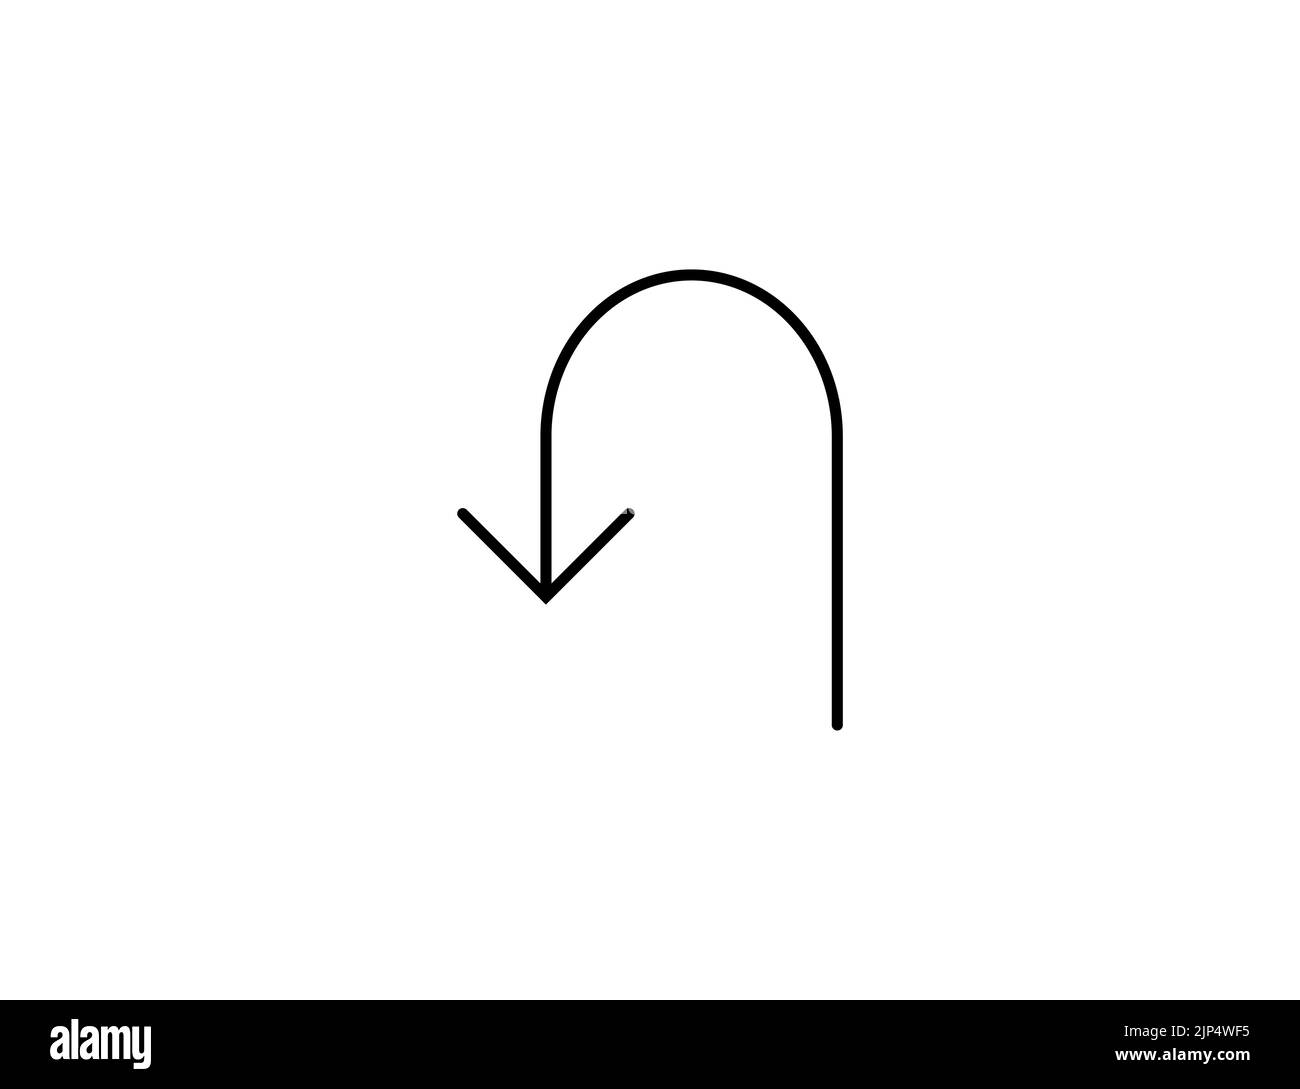 Arrow, direction, U Turn icon. Vector illustration. Stock Vector